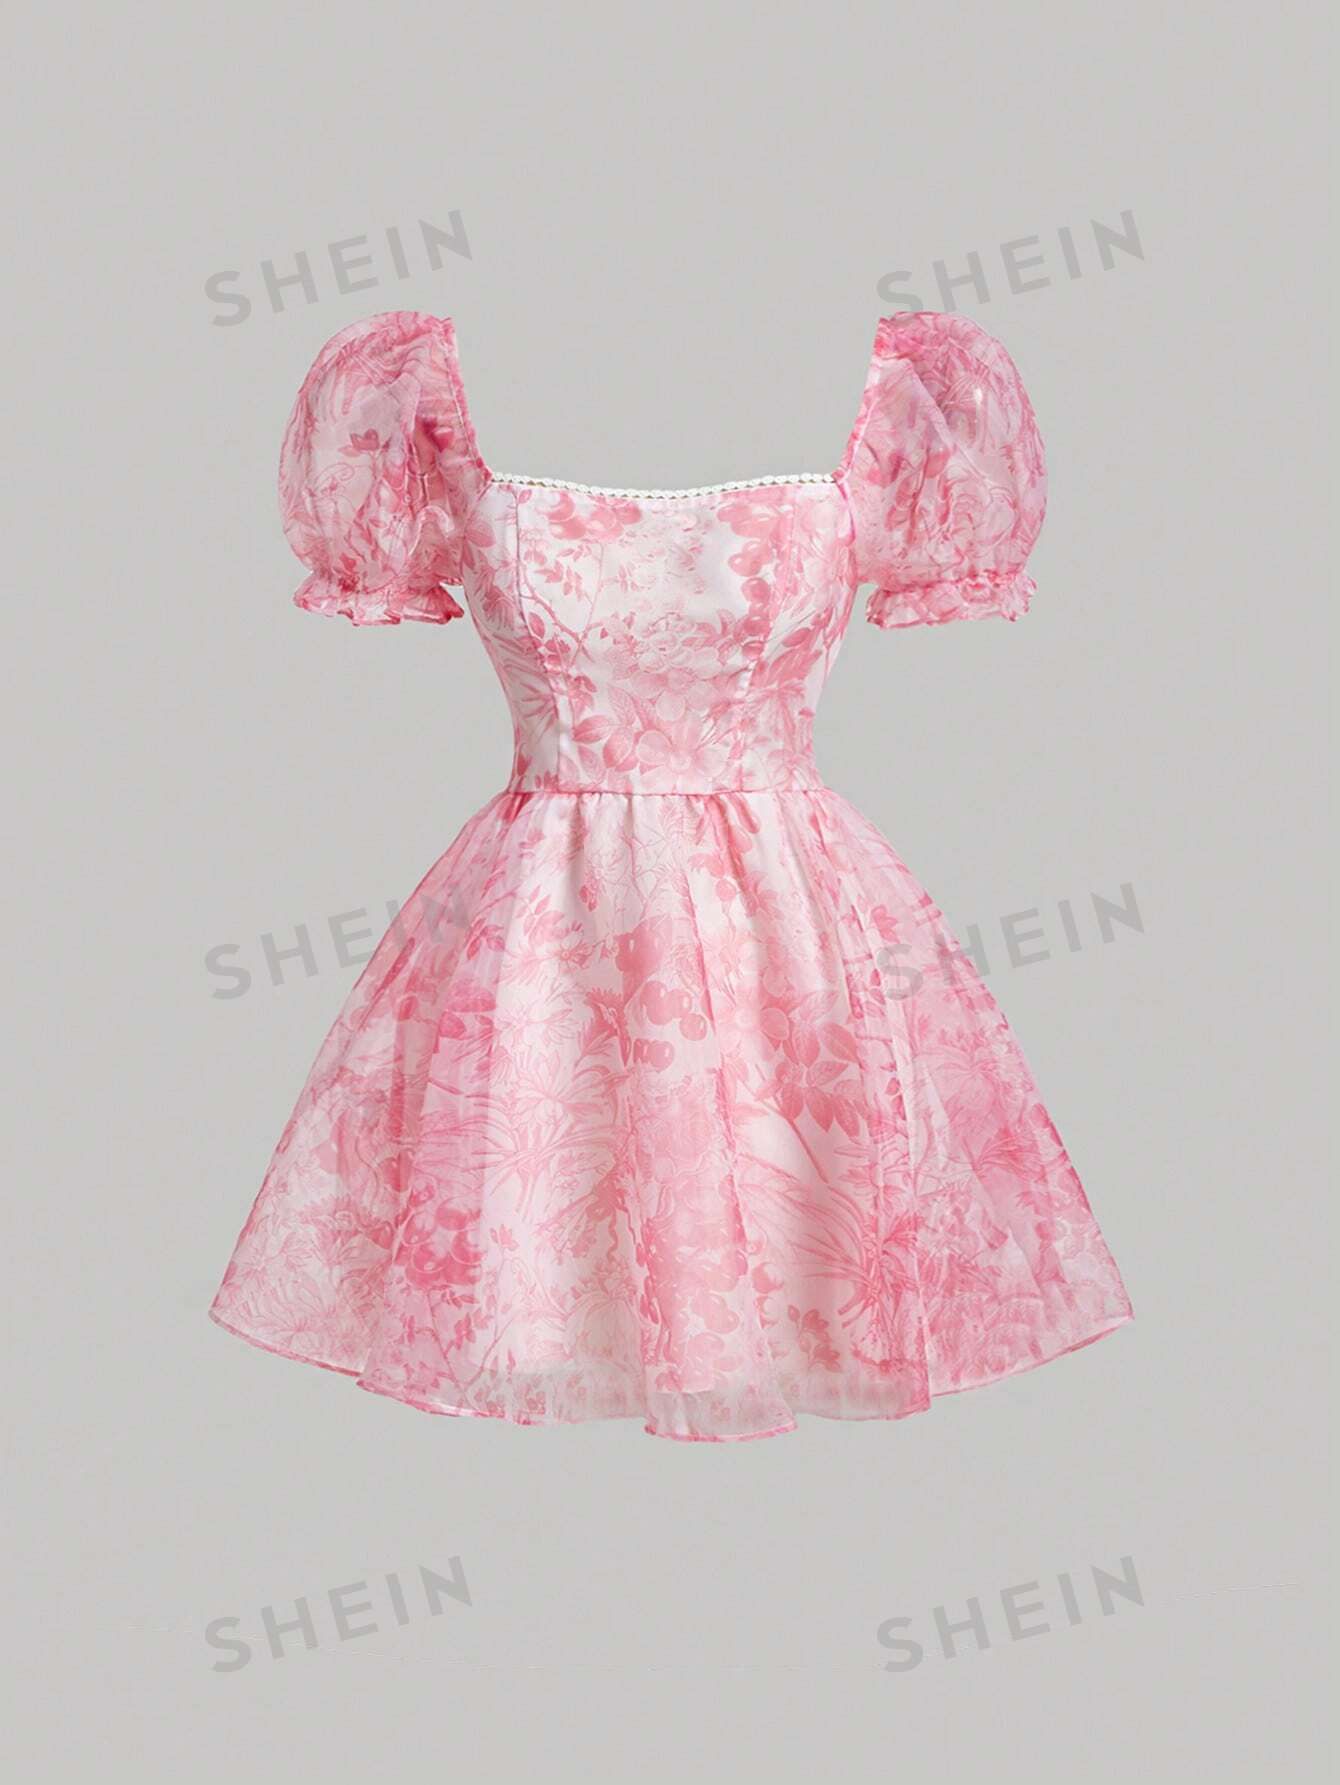 SHEIN MOD Floral Print Puff Sleeve Organza Dress | SHEIN